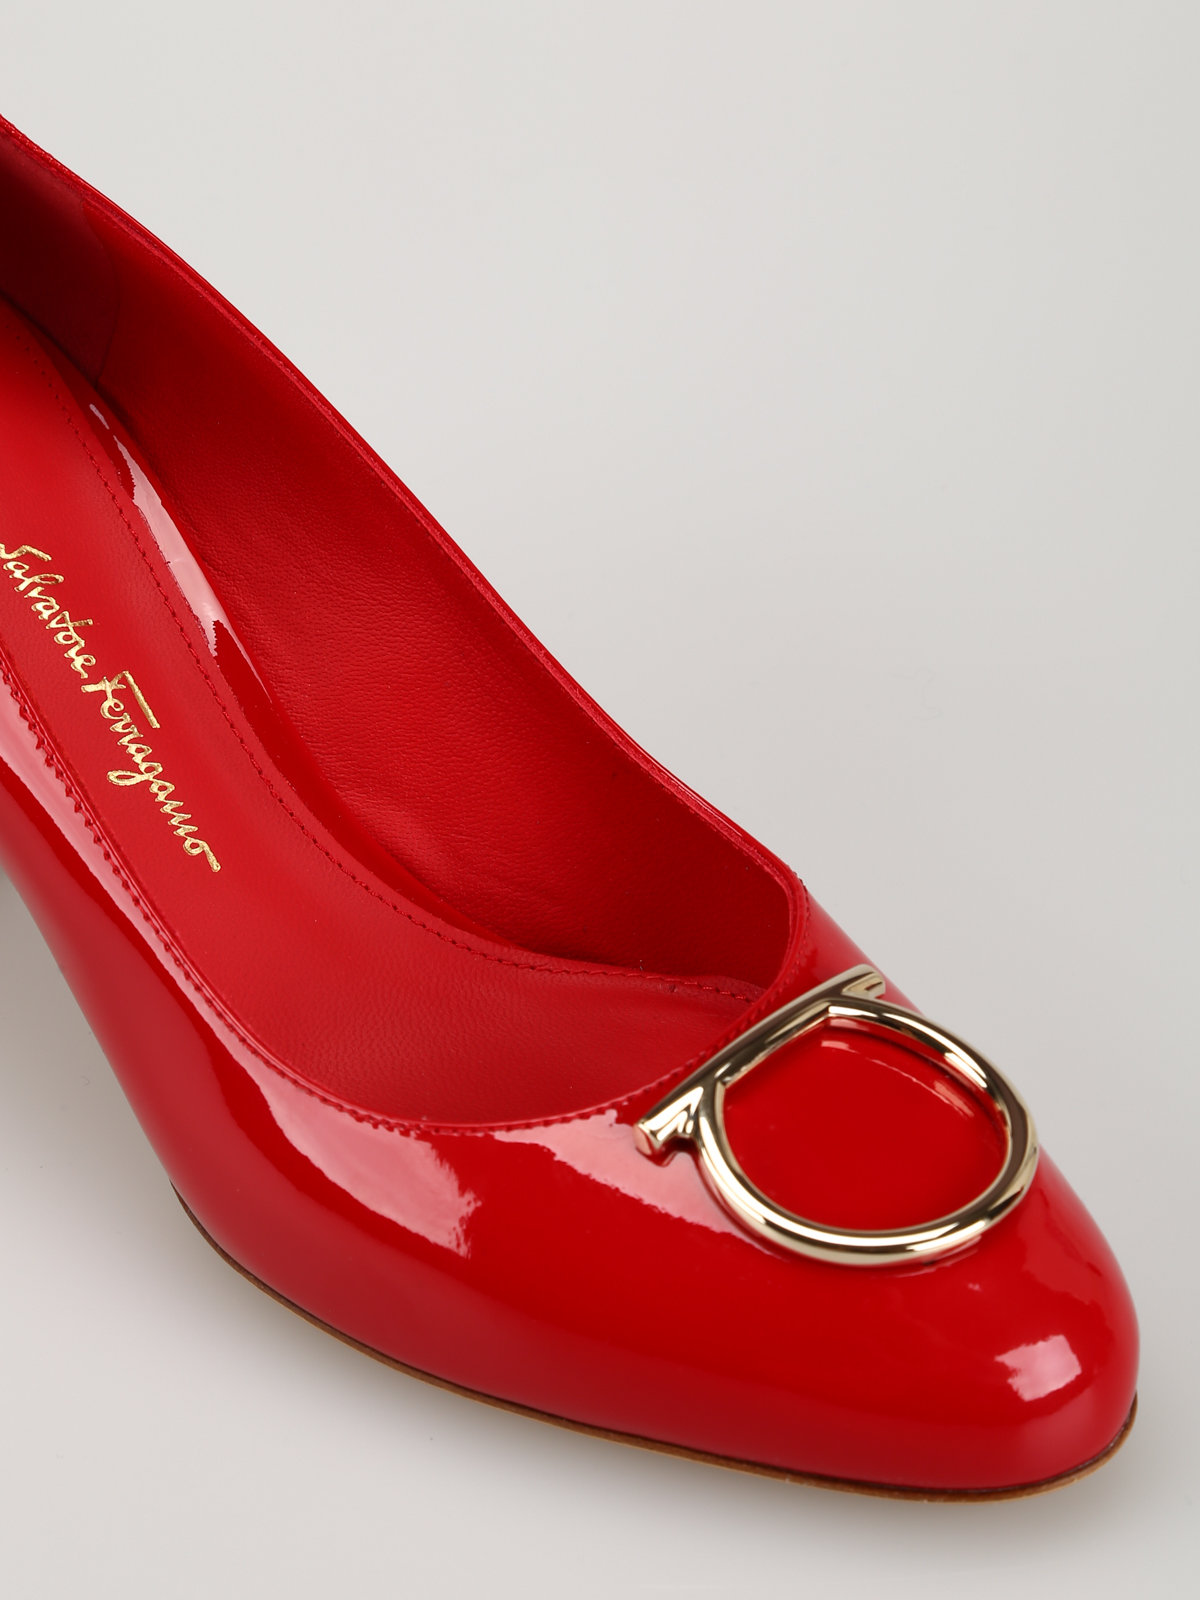 Court shoes Salvatore Ferragamo - Serina red patent pumps 